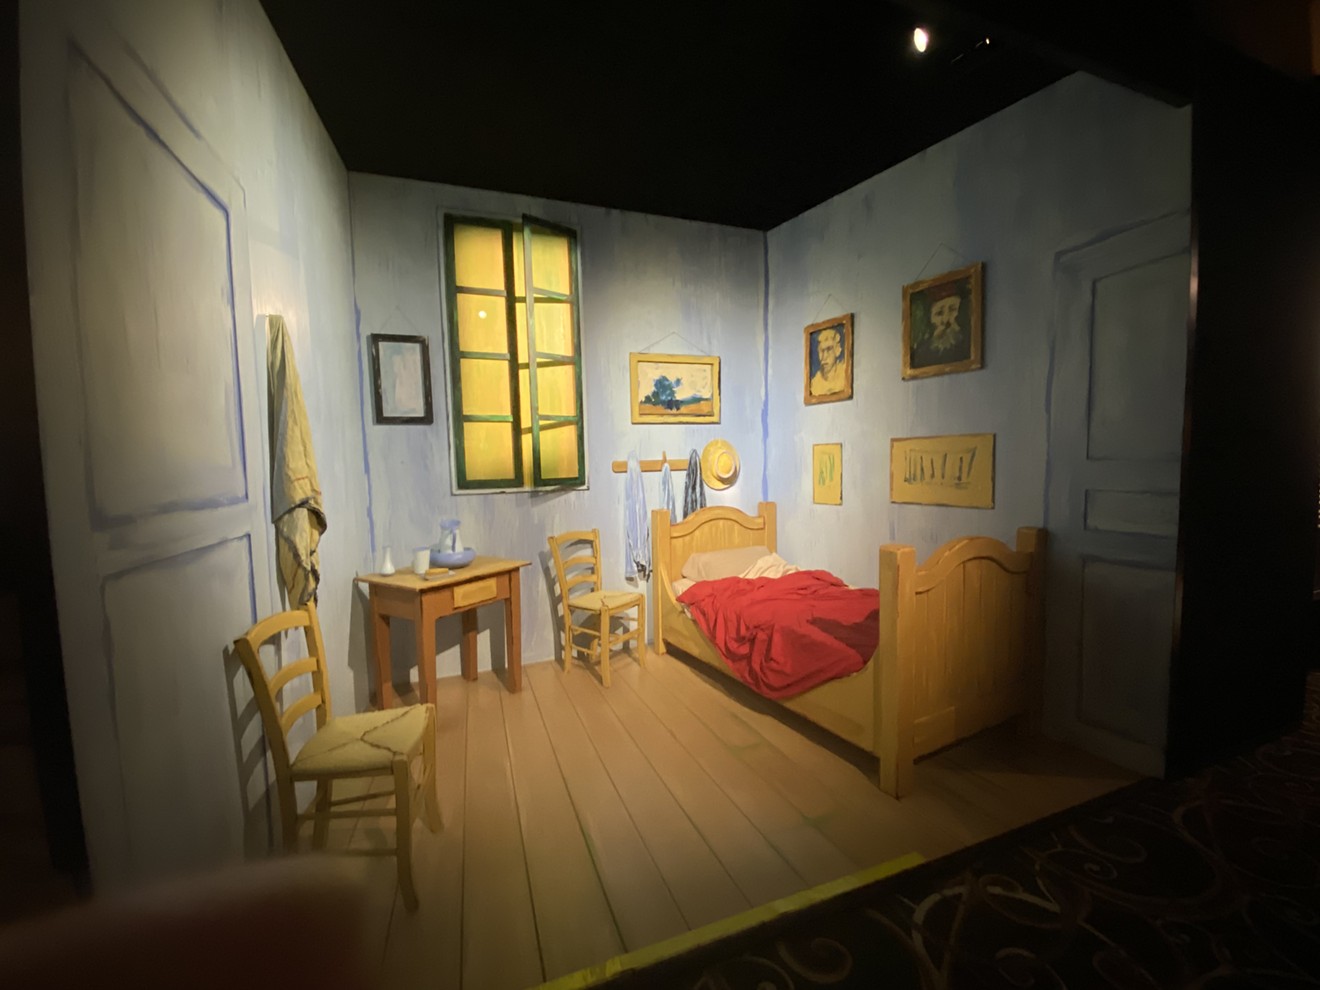 This room in Arlington Van Gogh looks familiar.